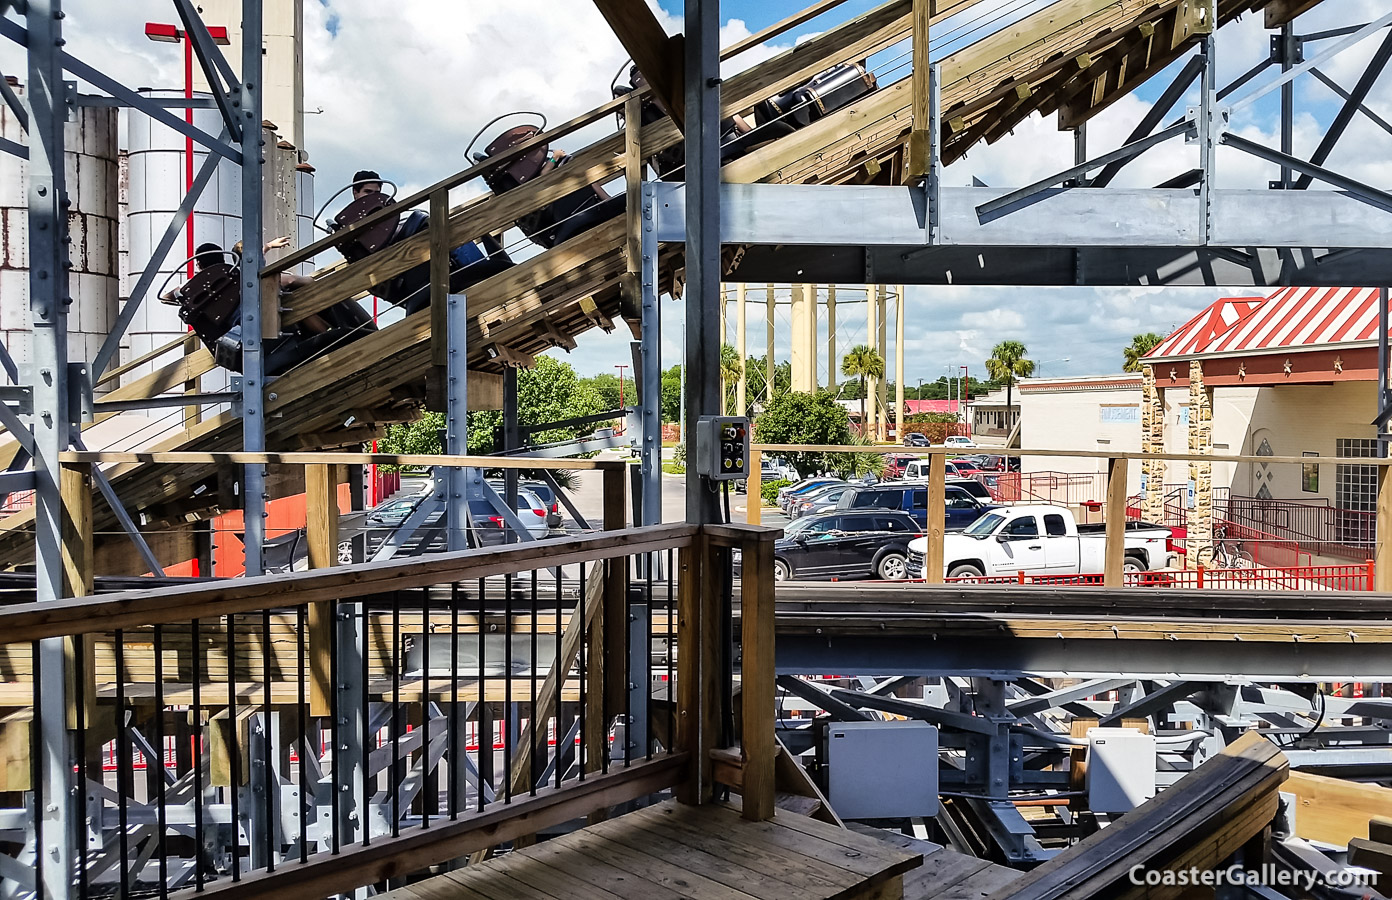 Switchback shuttle coaster at ZDT's Amusement Park